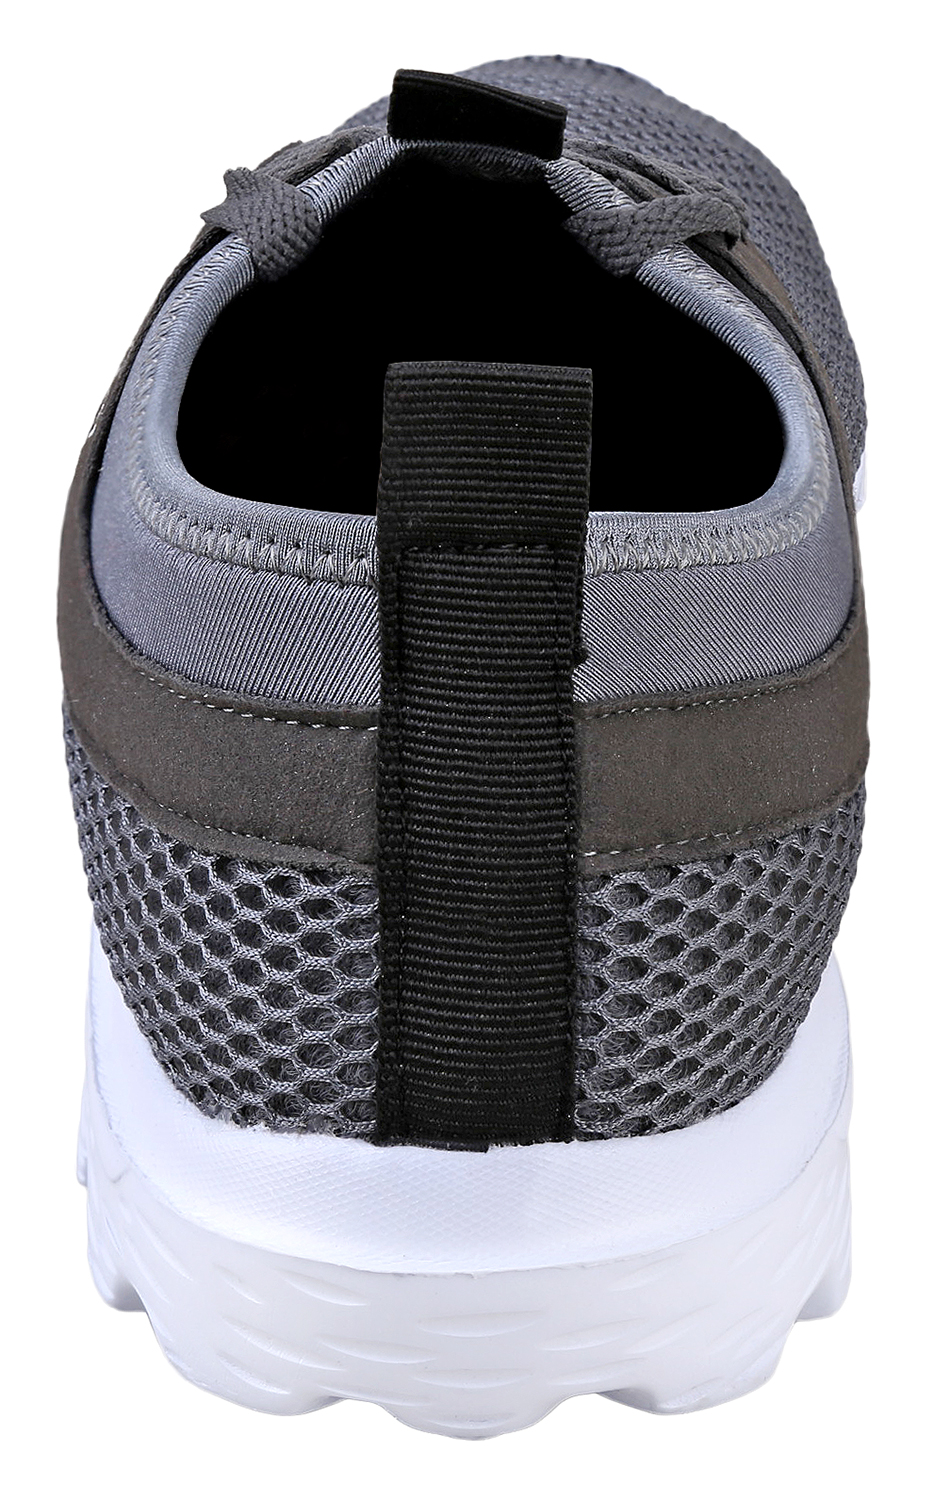 Urban Fox Men's Breeze Lightweight Shoes | Lightweight Shoes for Men | Casual Shoes | Walking Shoes for Men | Grey/White 8 M US - image 4 of 7